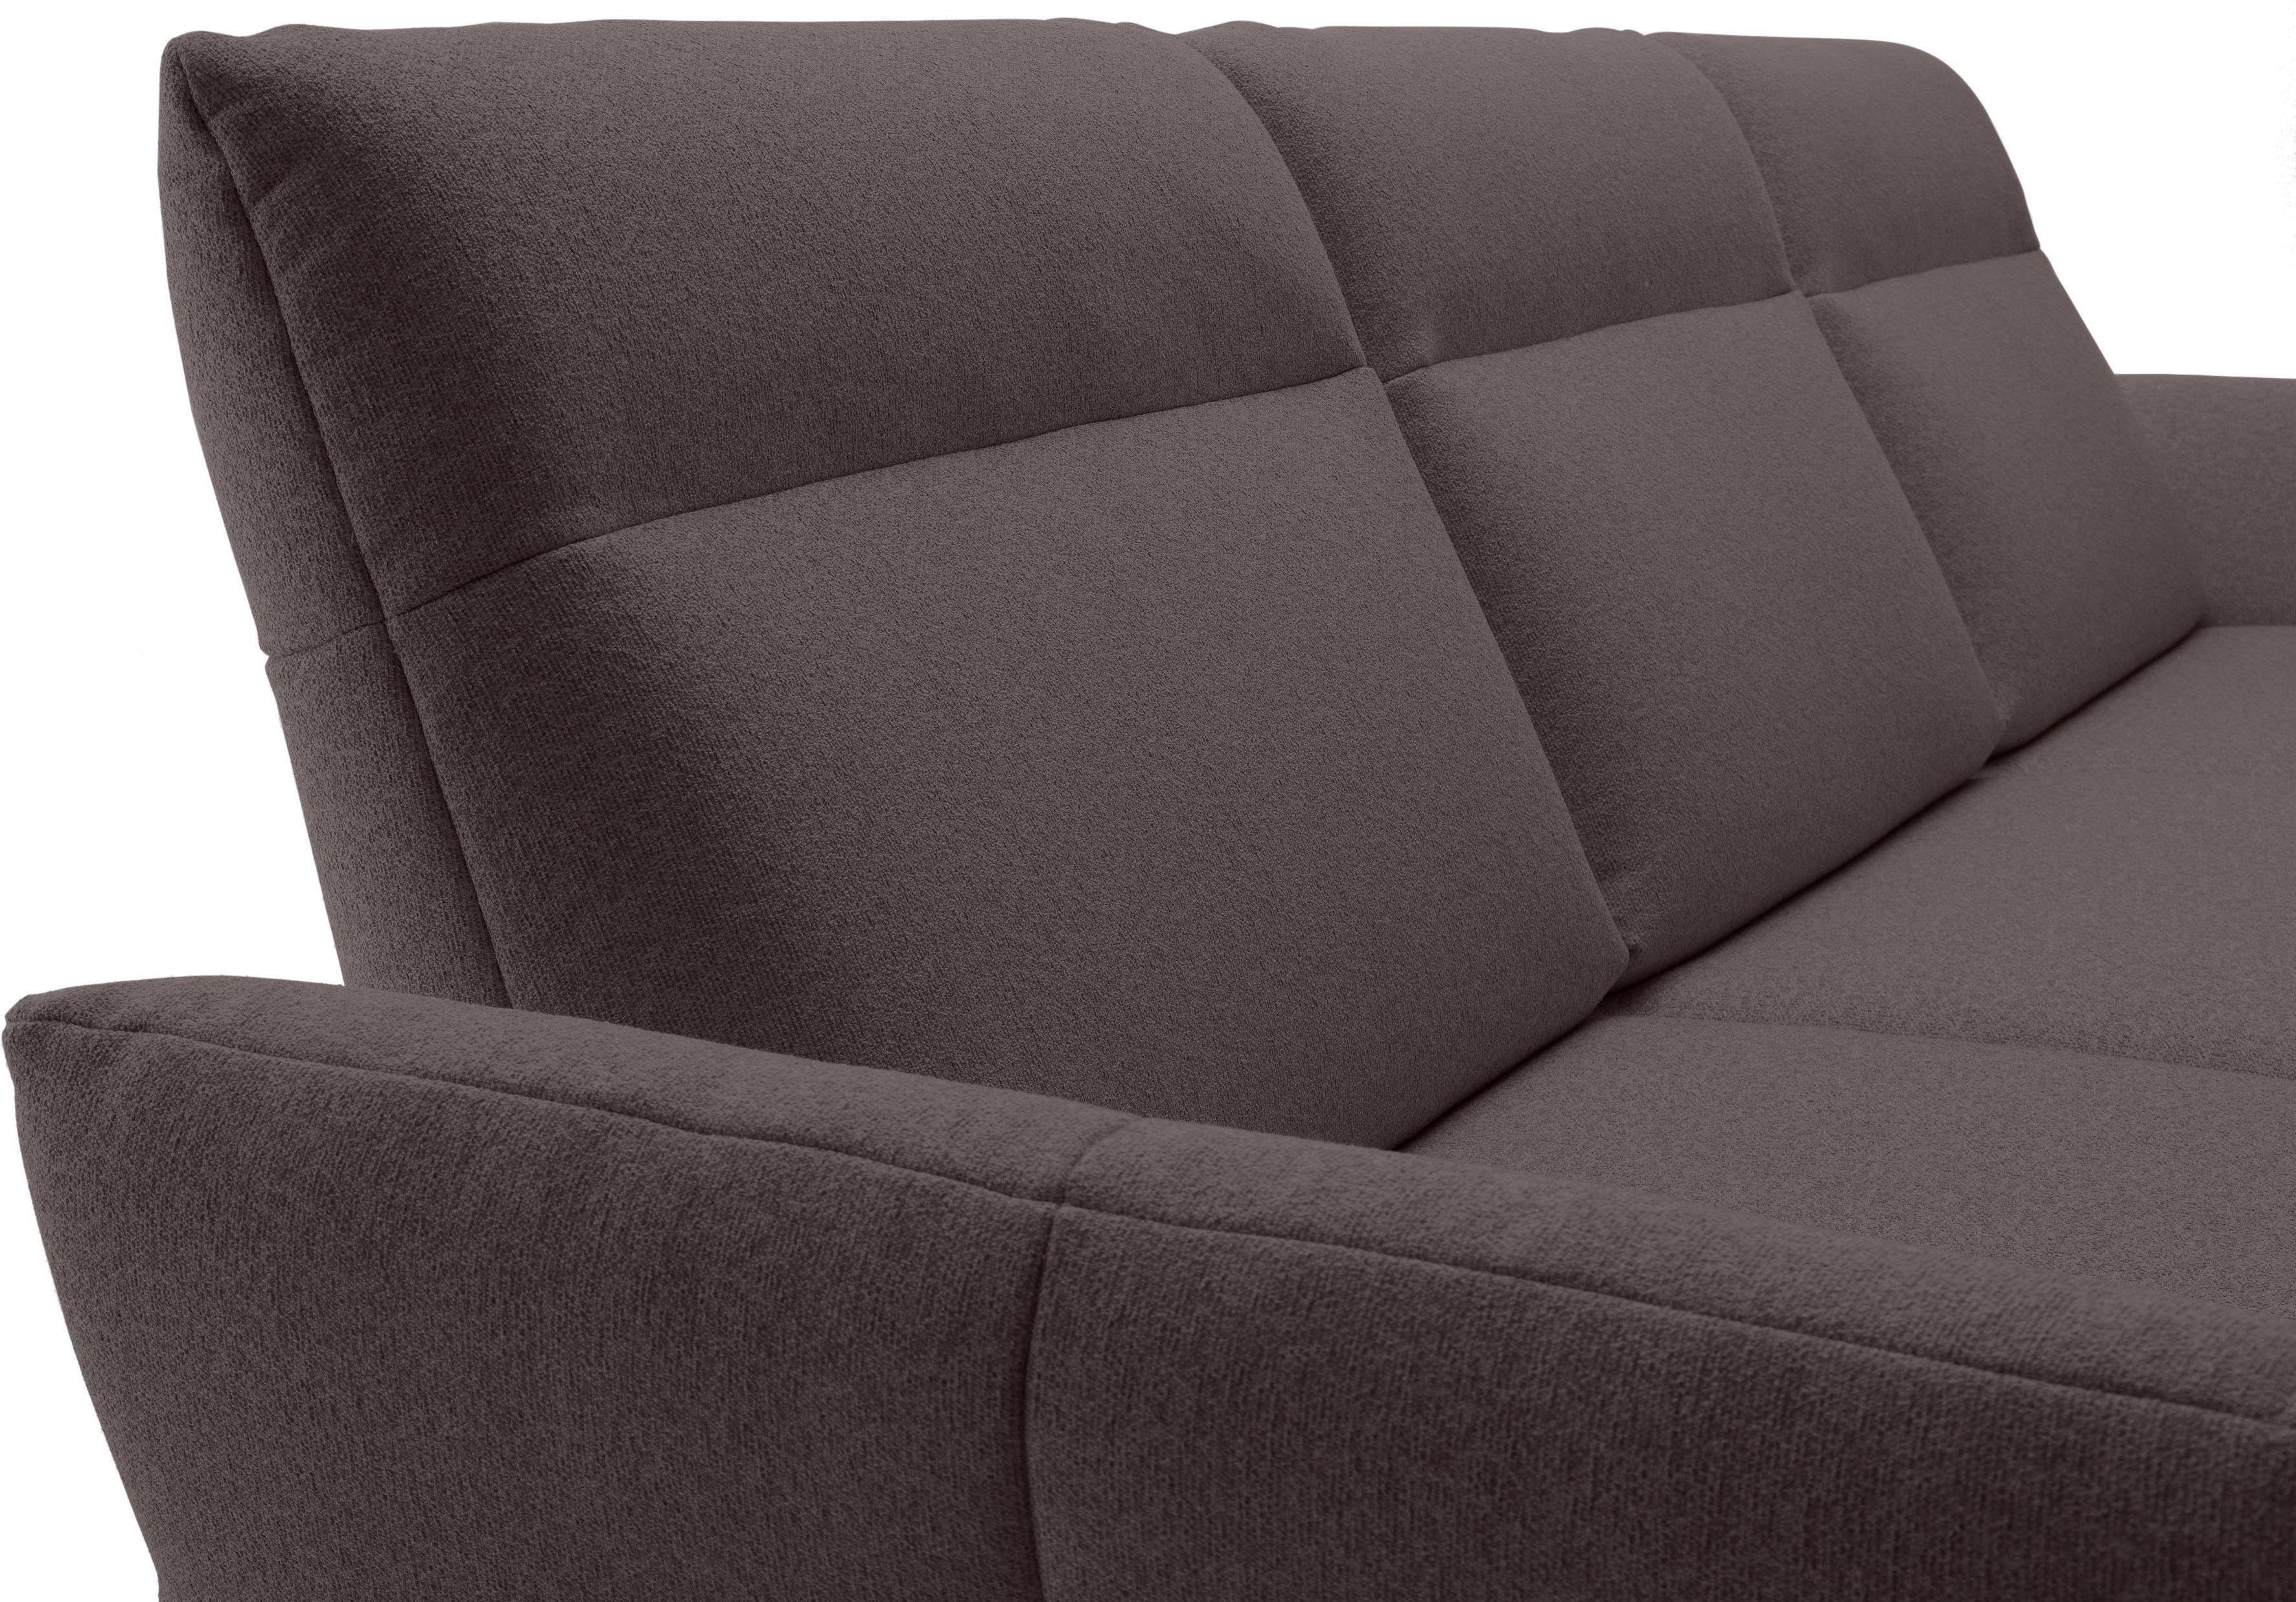 cm Breite sofa Umbragrau, Ecksofa in Winkelfüße hülsta hs.460, Eiche, in Sockel 338